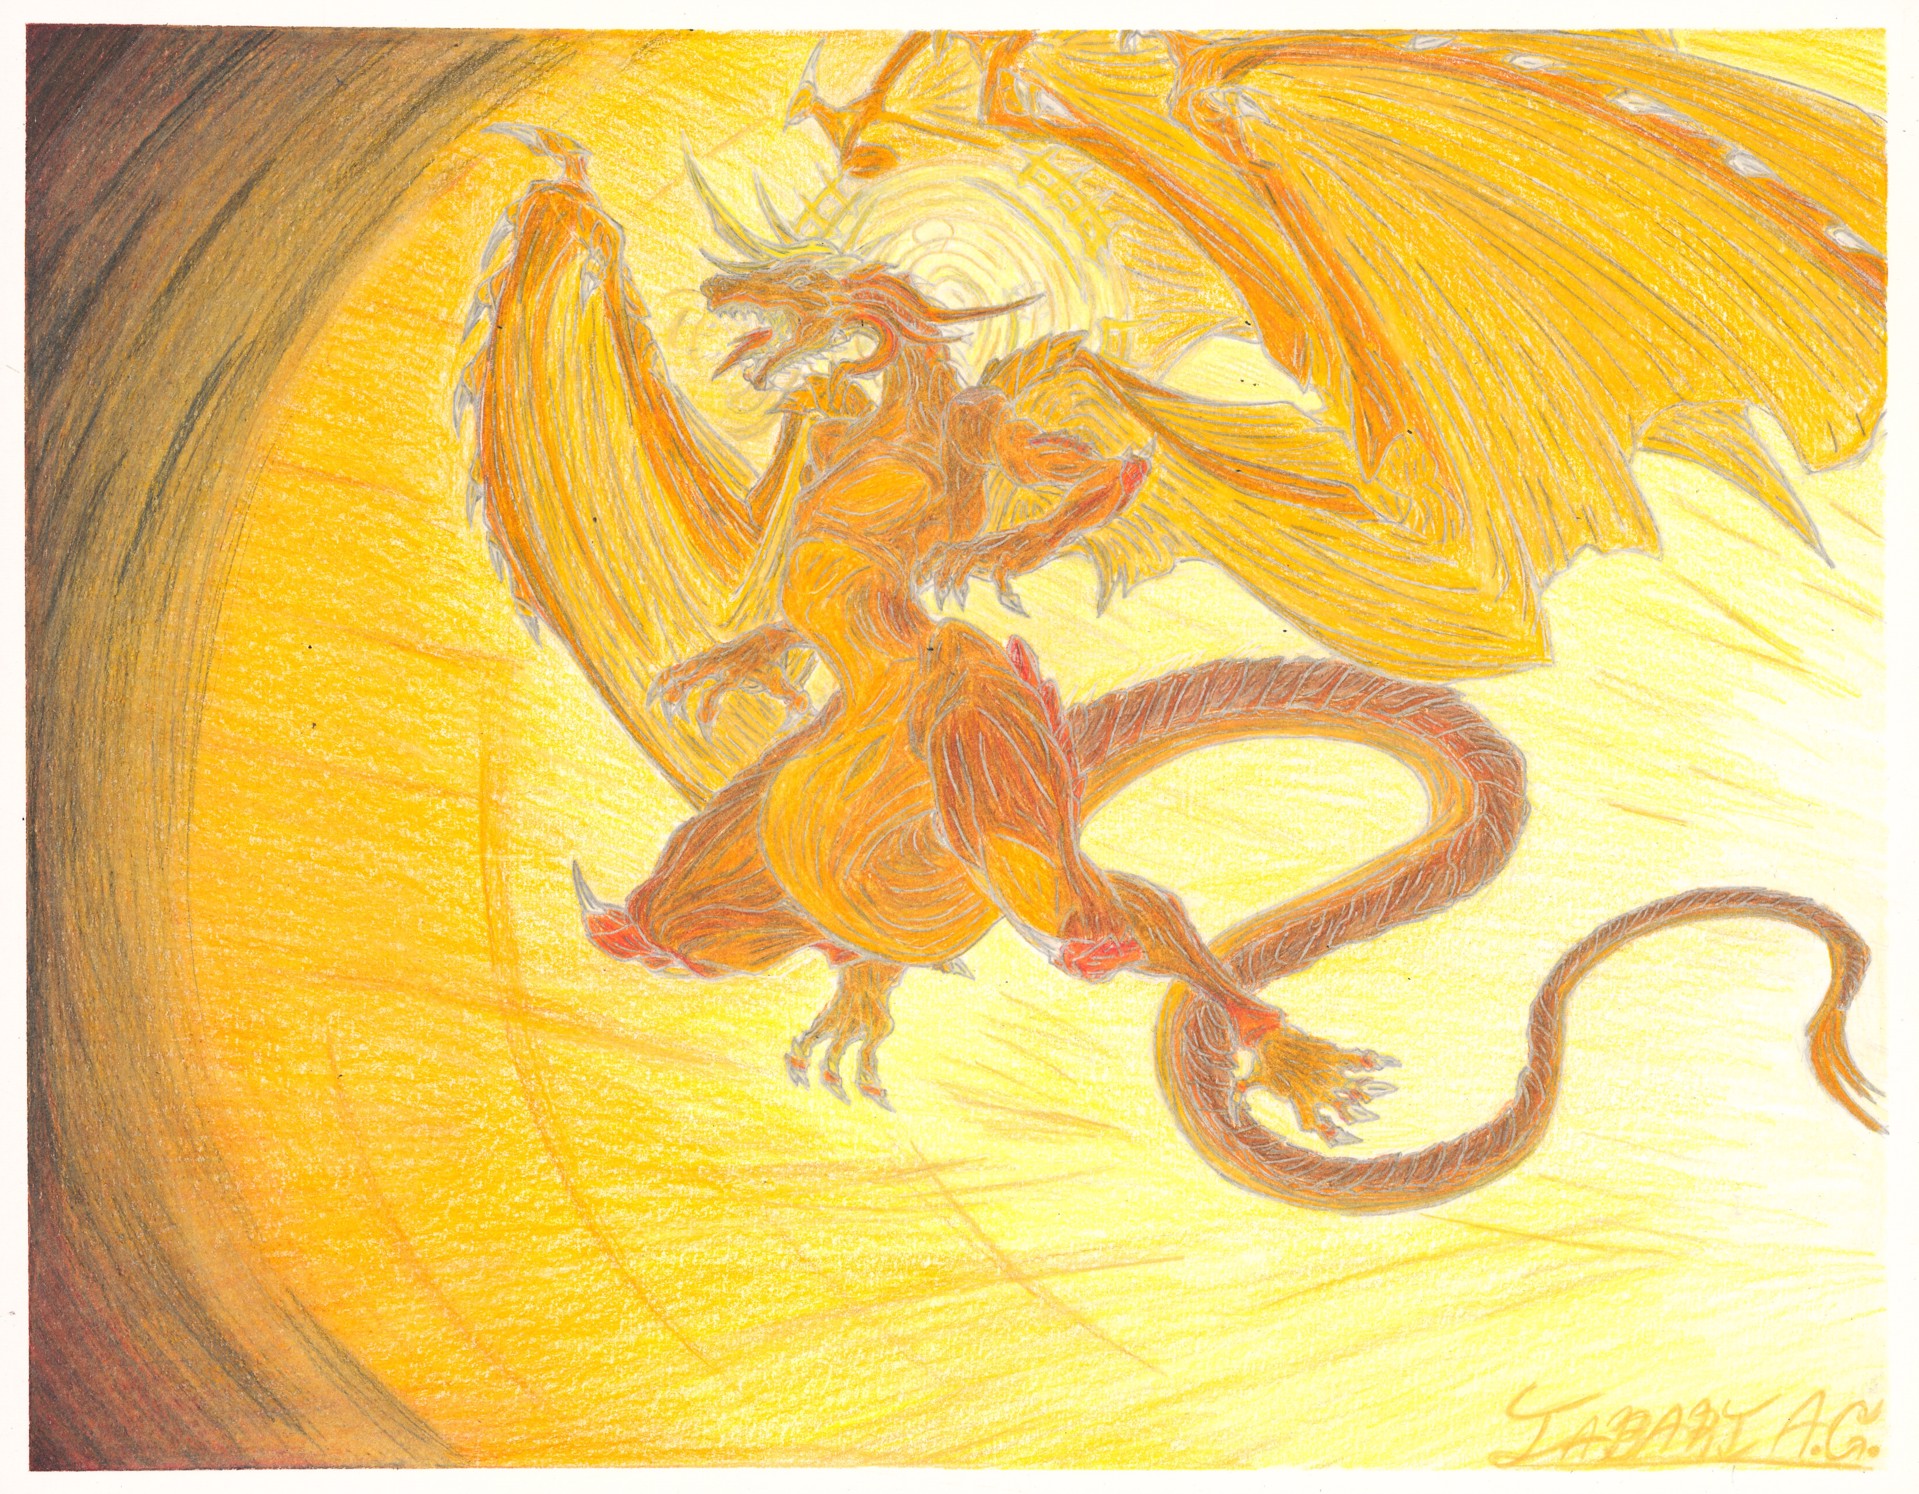 The Dragon King by Jabari Cooper